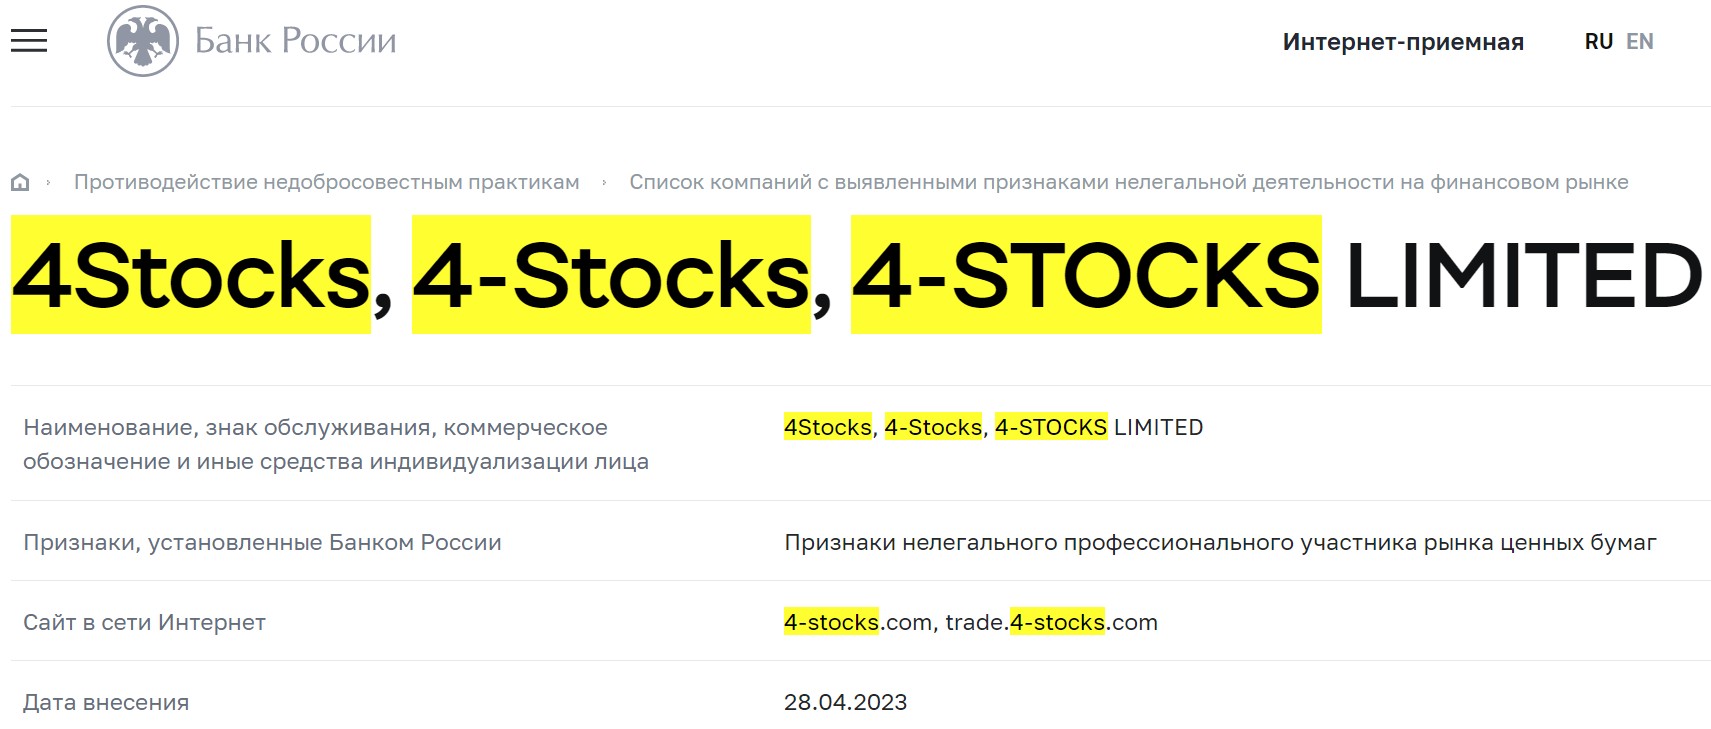 4-Stocks обзор компании